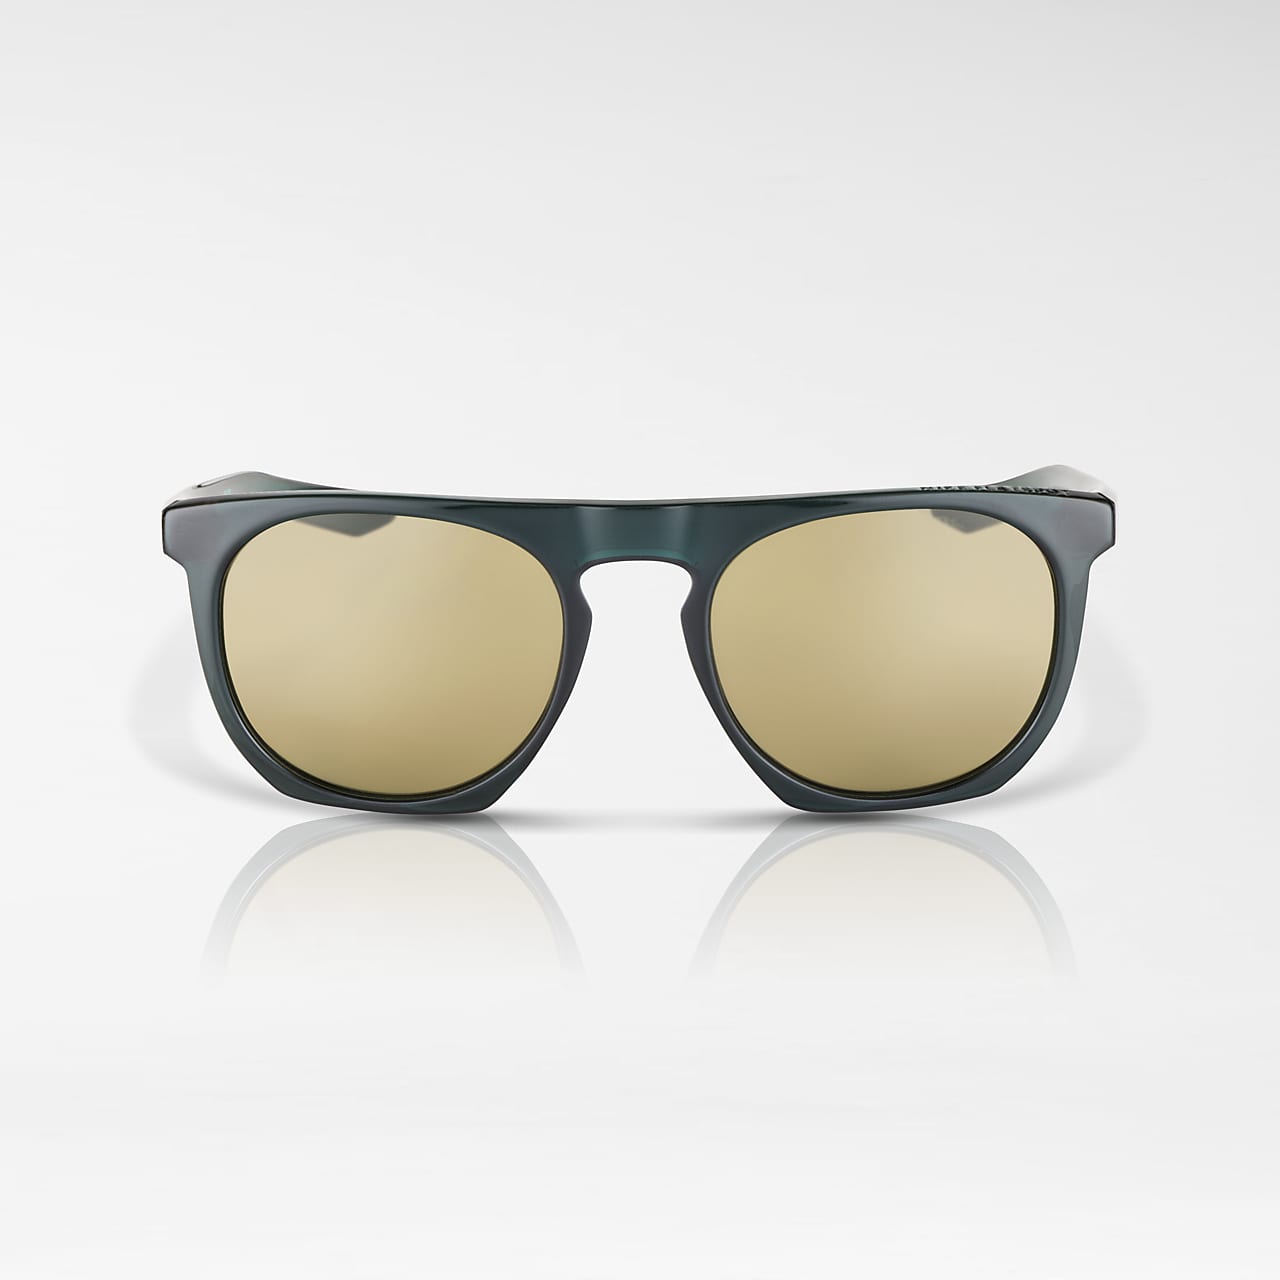 Flatspot Sunglasses Online, 31% - aveclumiere.com